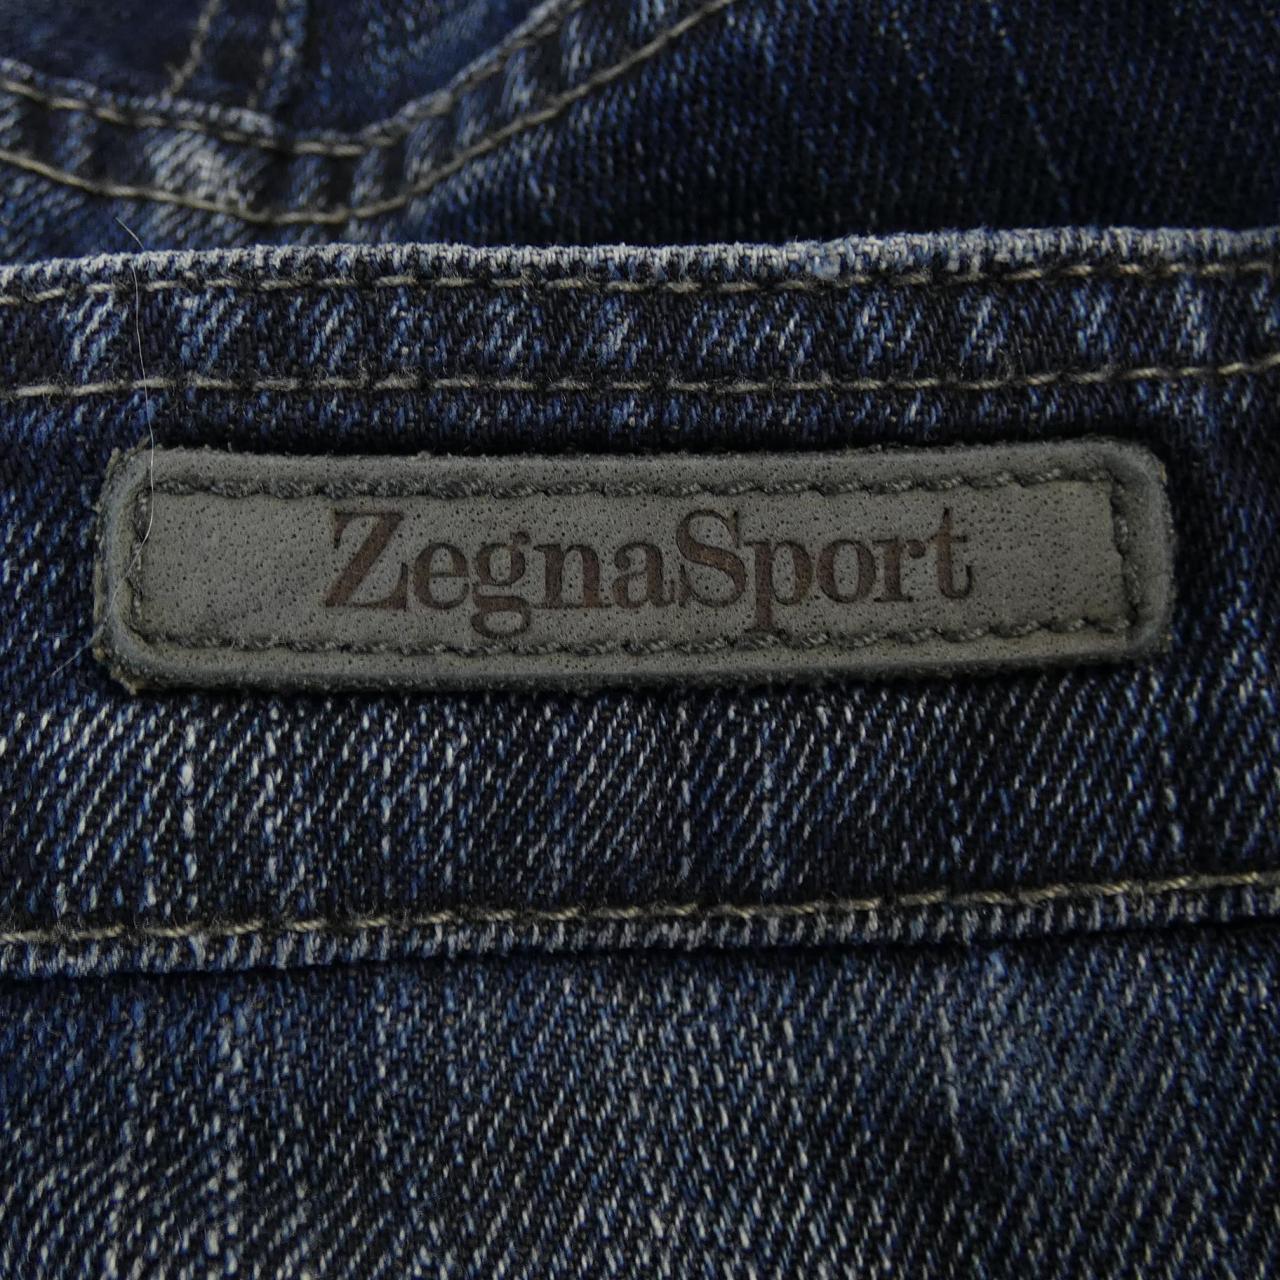 牛仔运动ZEGNA SPORT牛仔裤